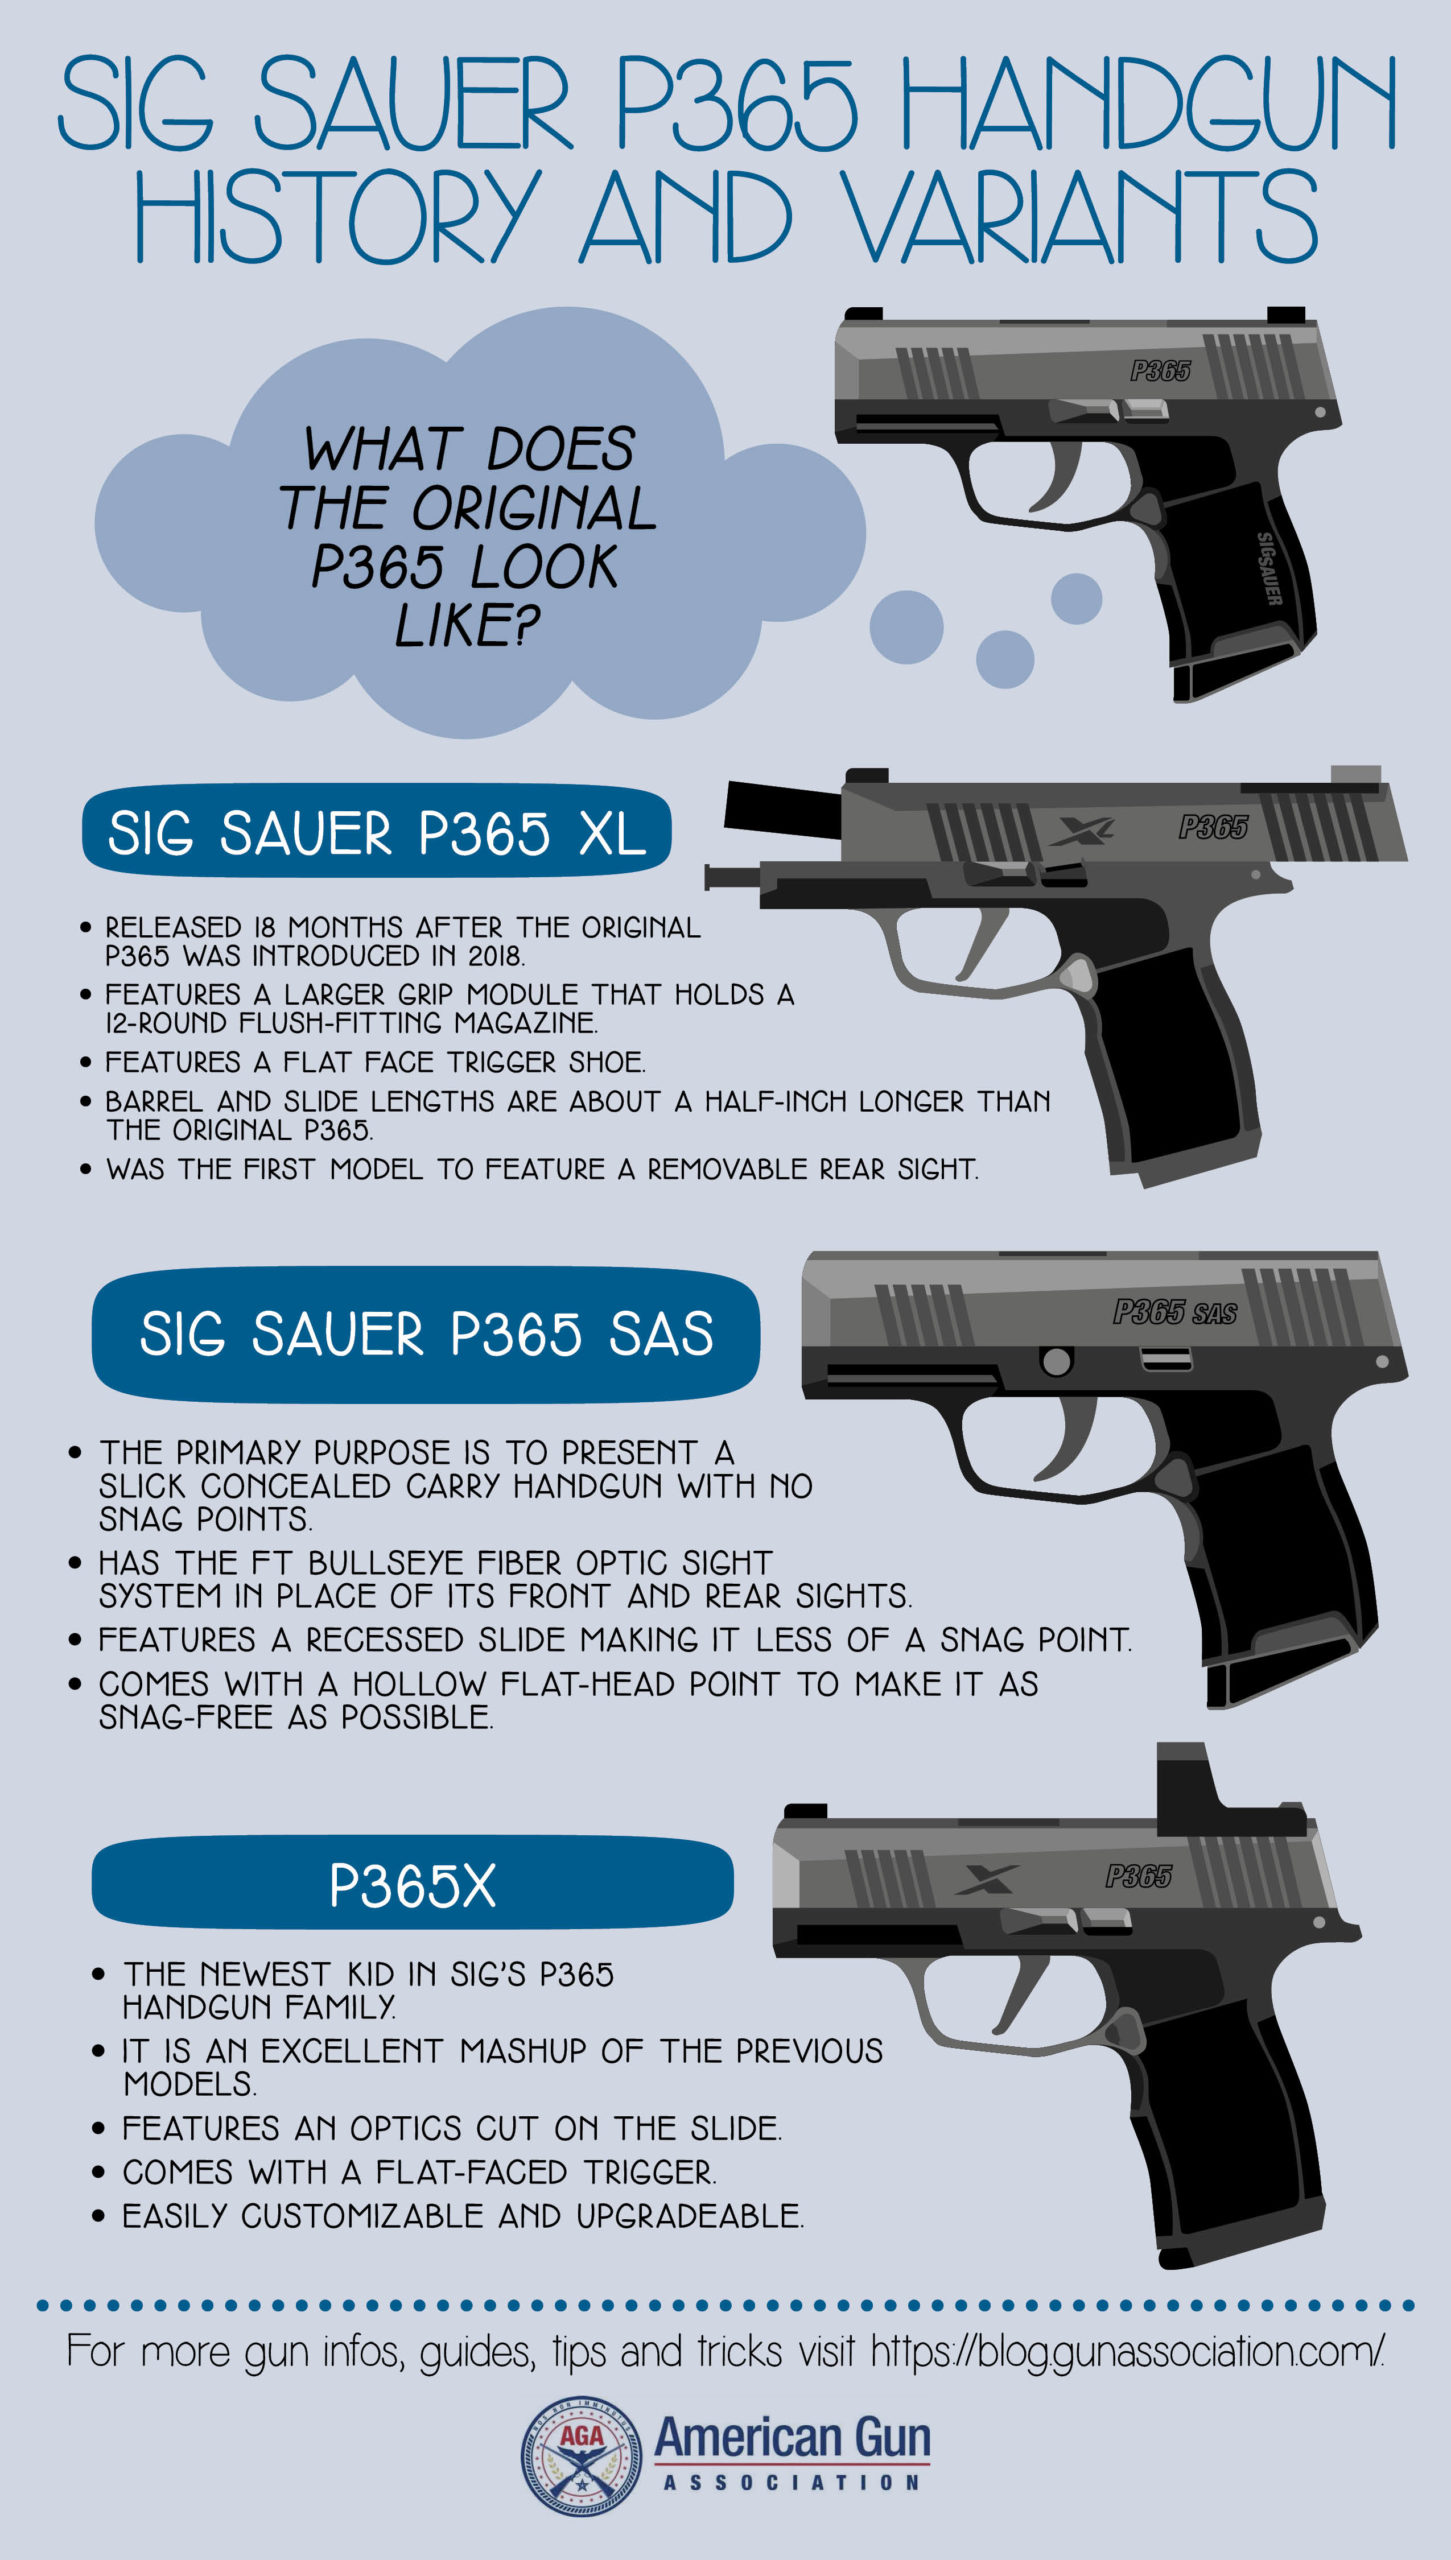 Sig’s P365 Handgun Family | infographic